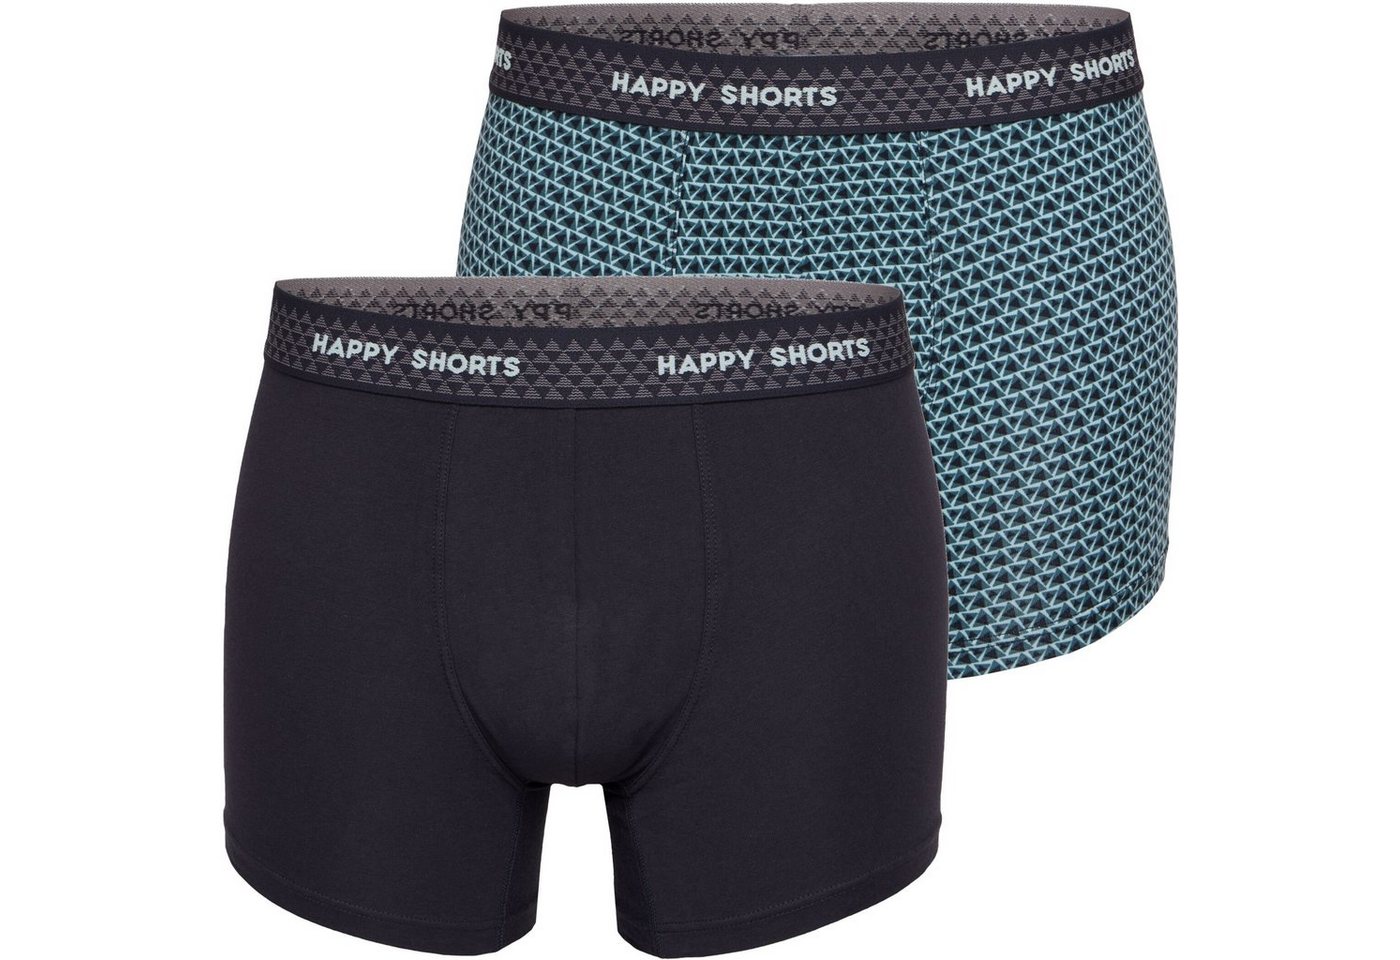 HAPPY SHORTS Trunk 2 Happy Shorts Jersey Trunk Herren Boxershorts Pant Minze Dreiecke (1-St) von HAPPY SHORTS